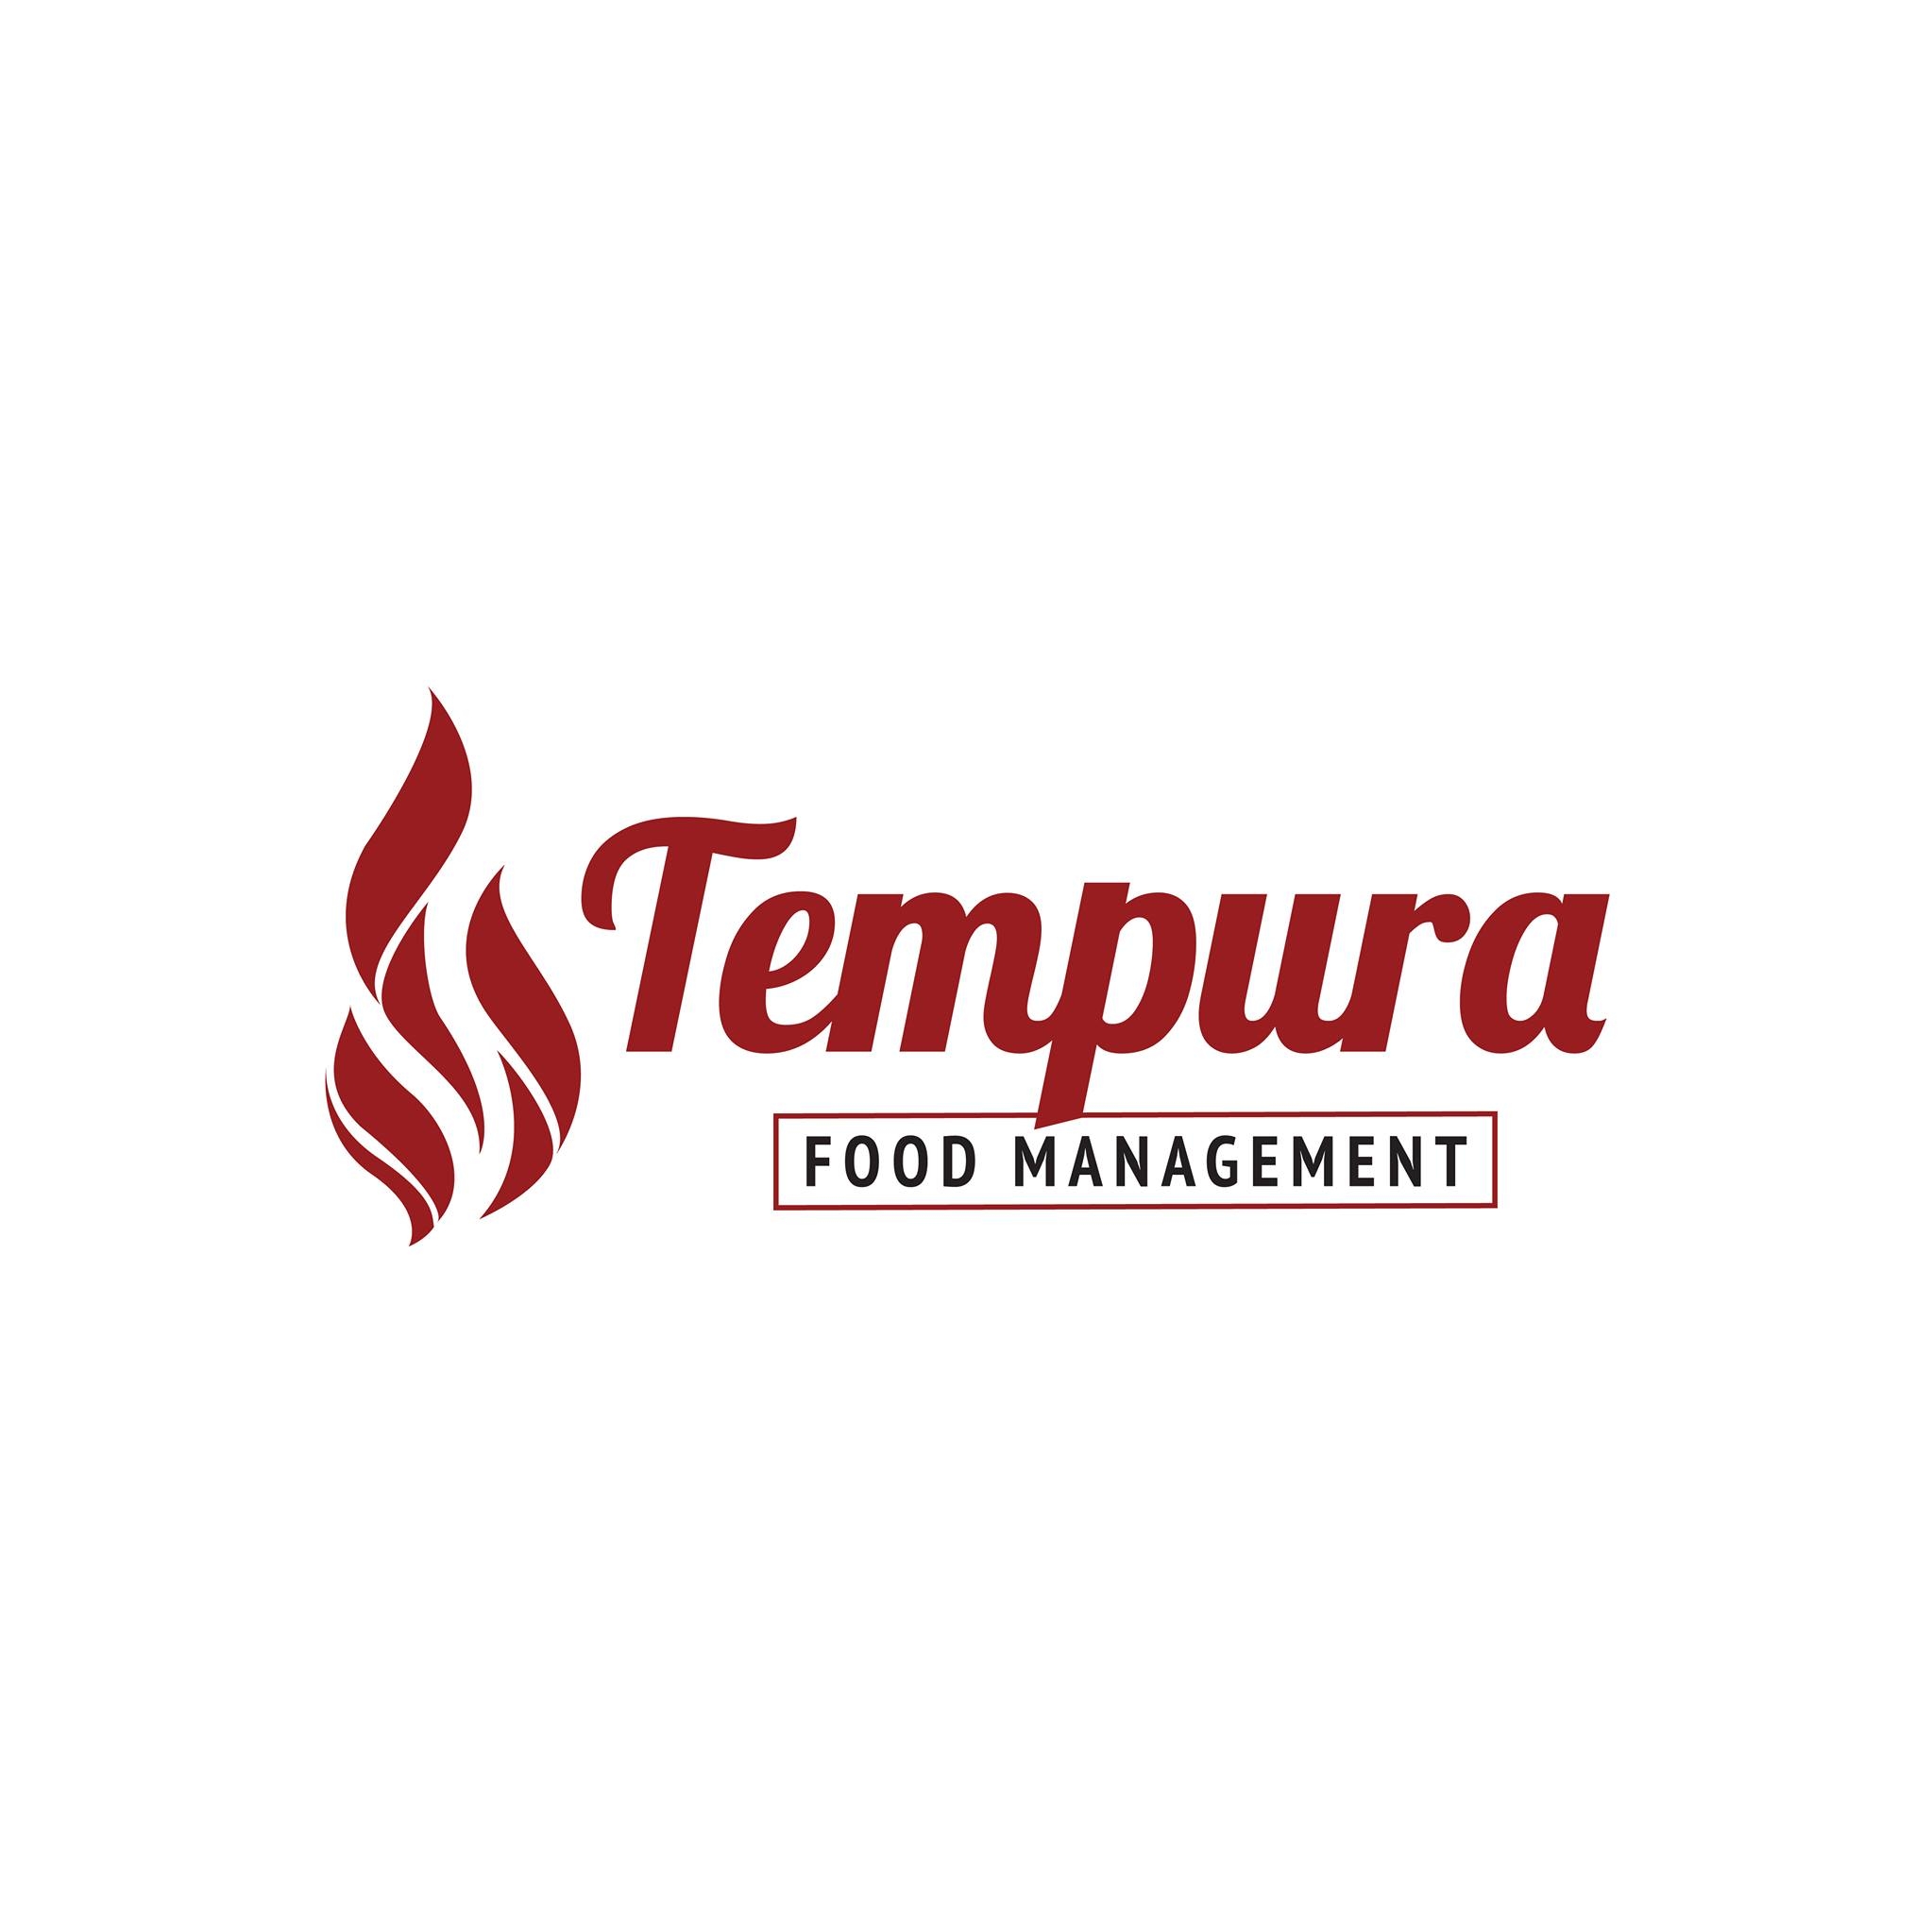 Tempura Food Management